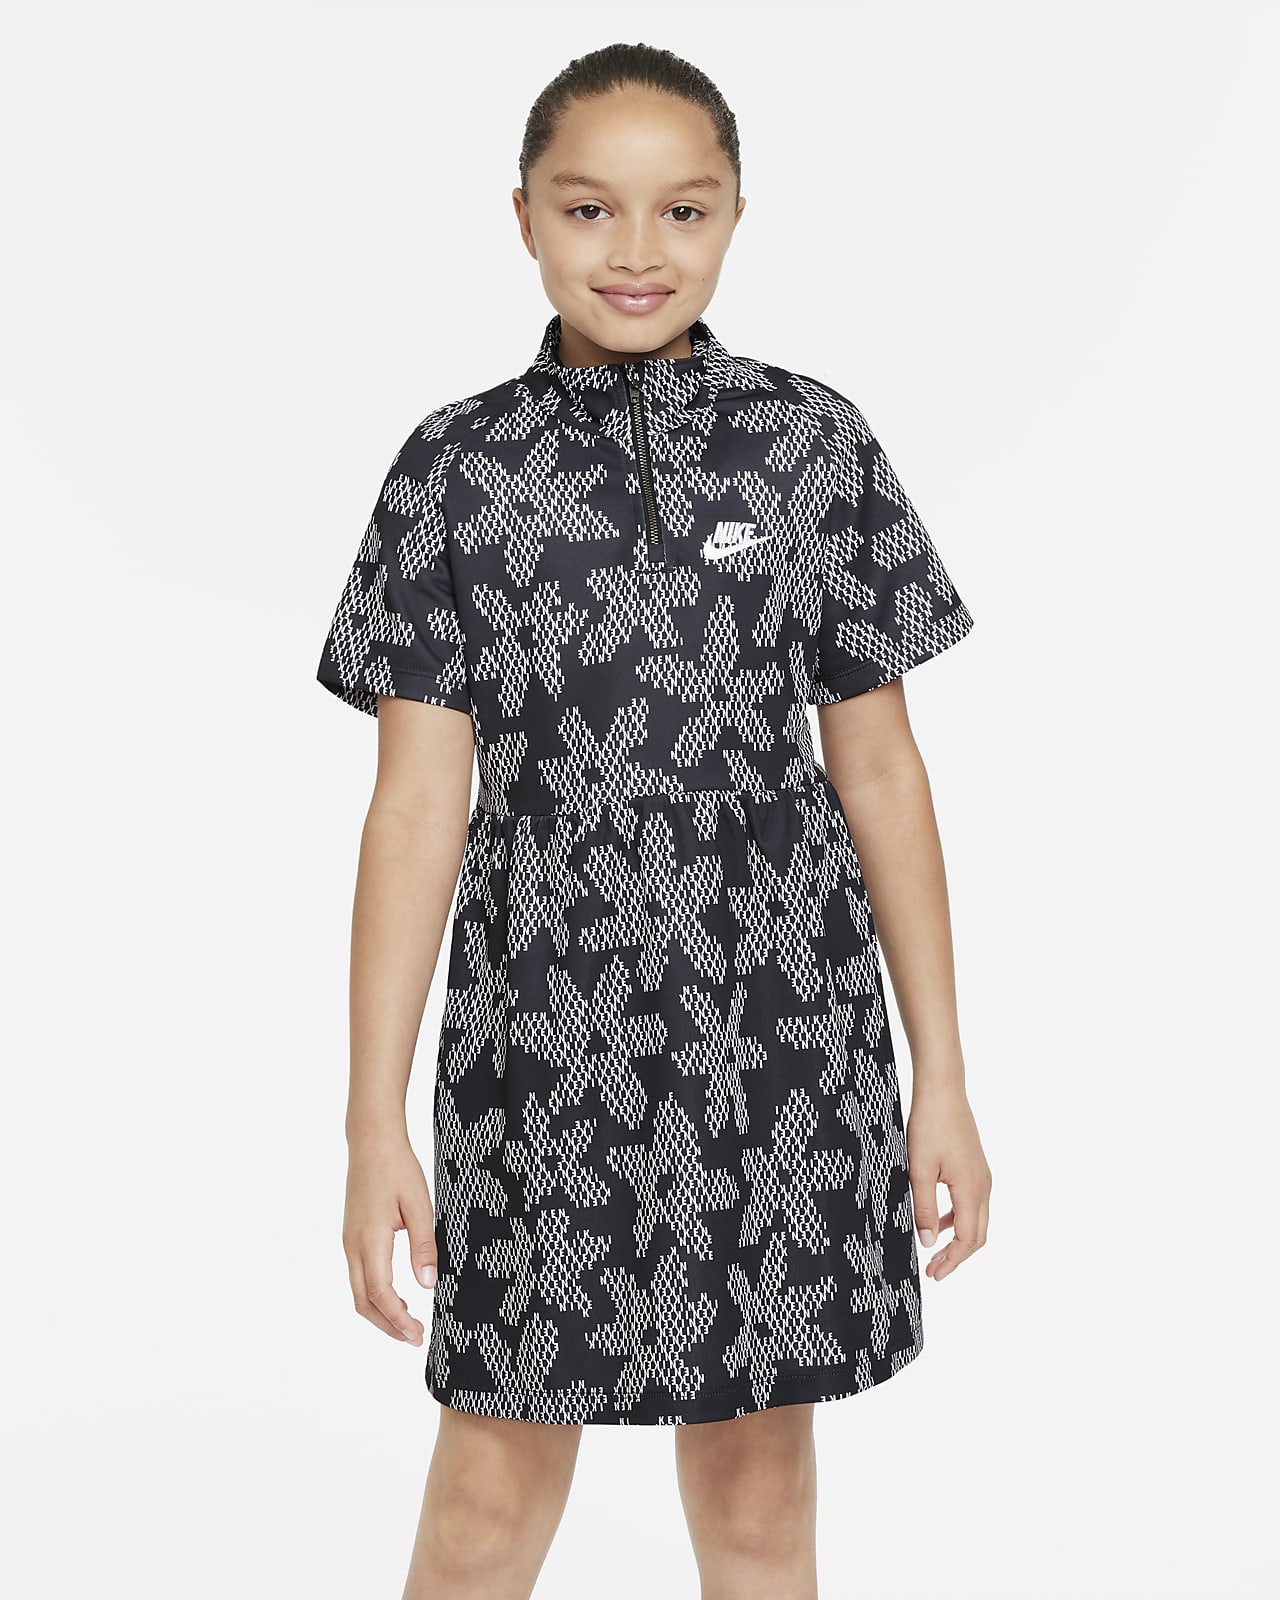 Nike Sportswear Big Kids' (Girls') Printed Short-Sleeve Dress